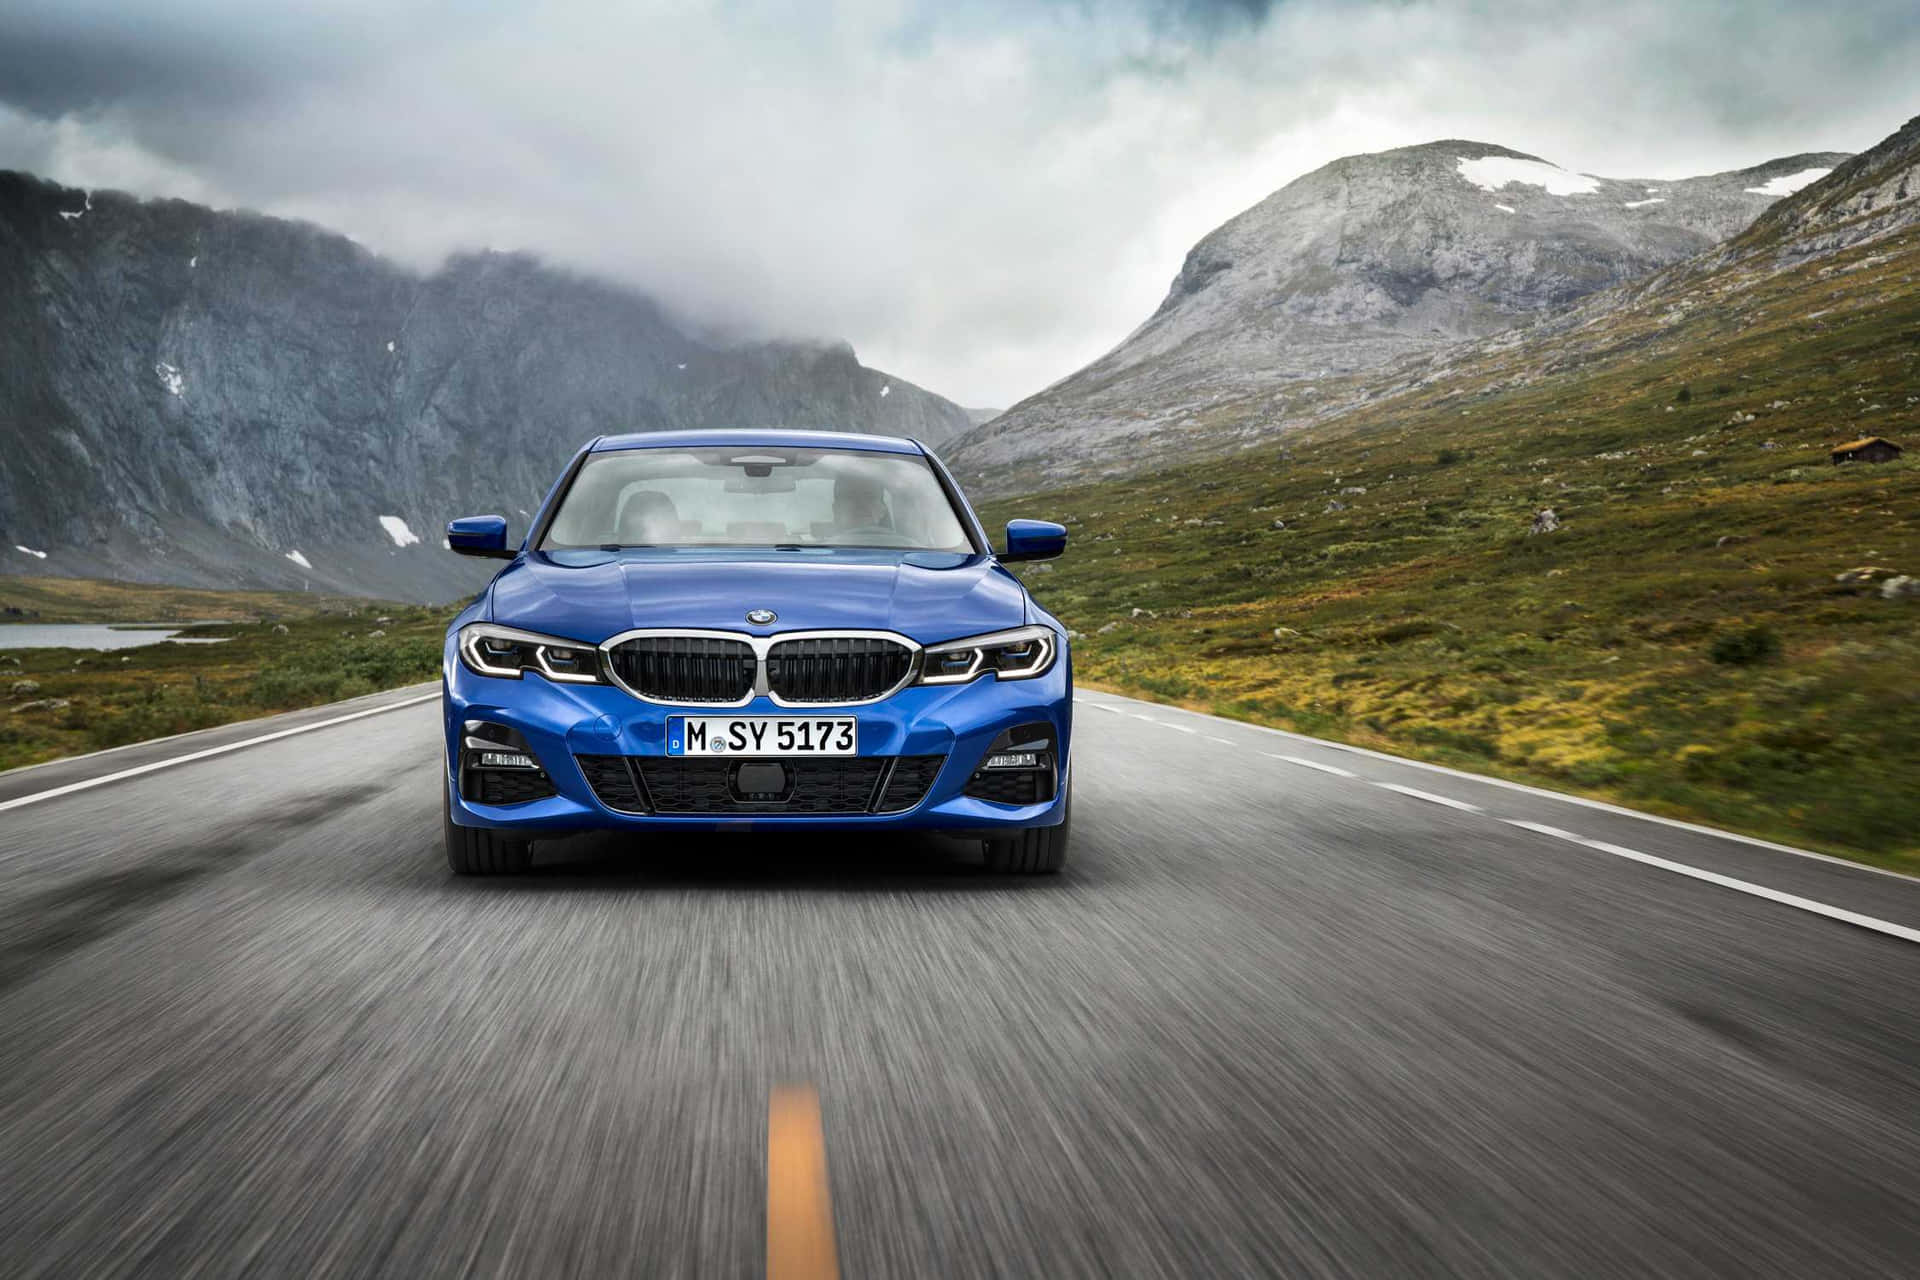 Explore the sleek design of the BMW M Series